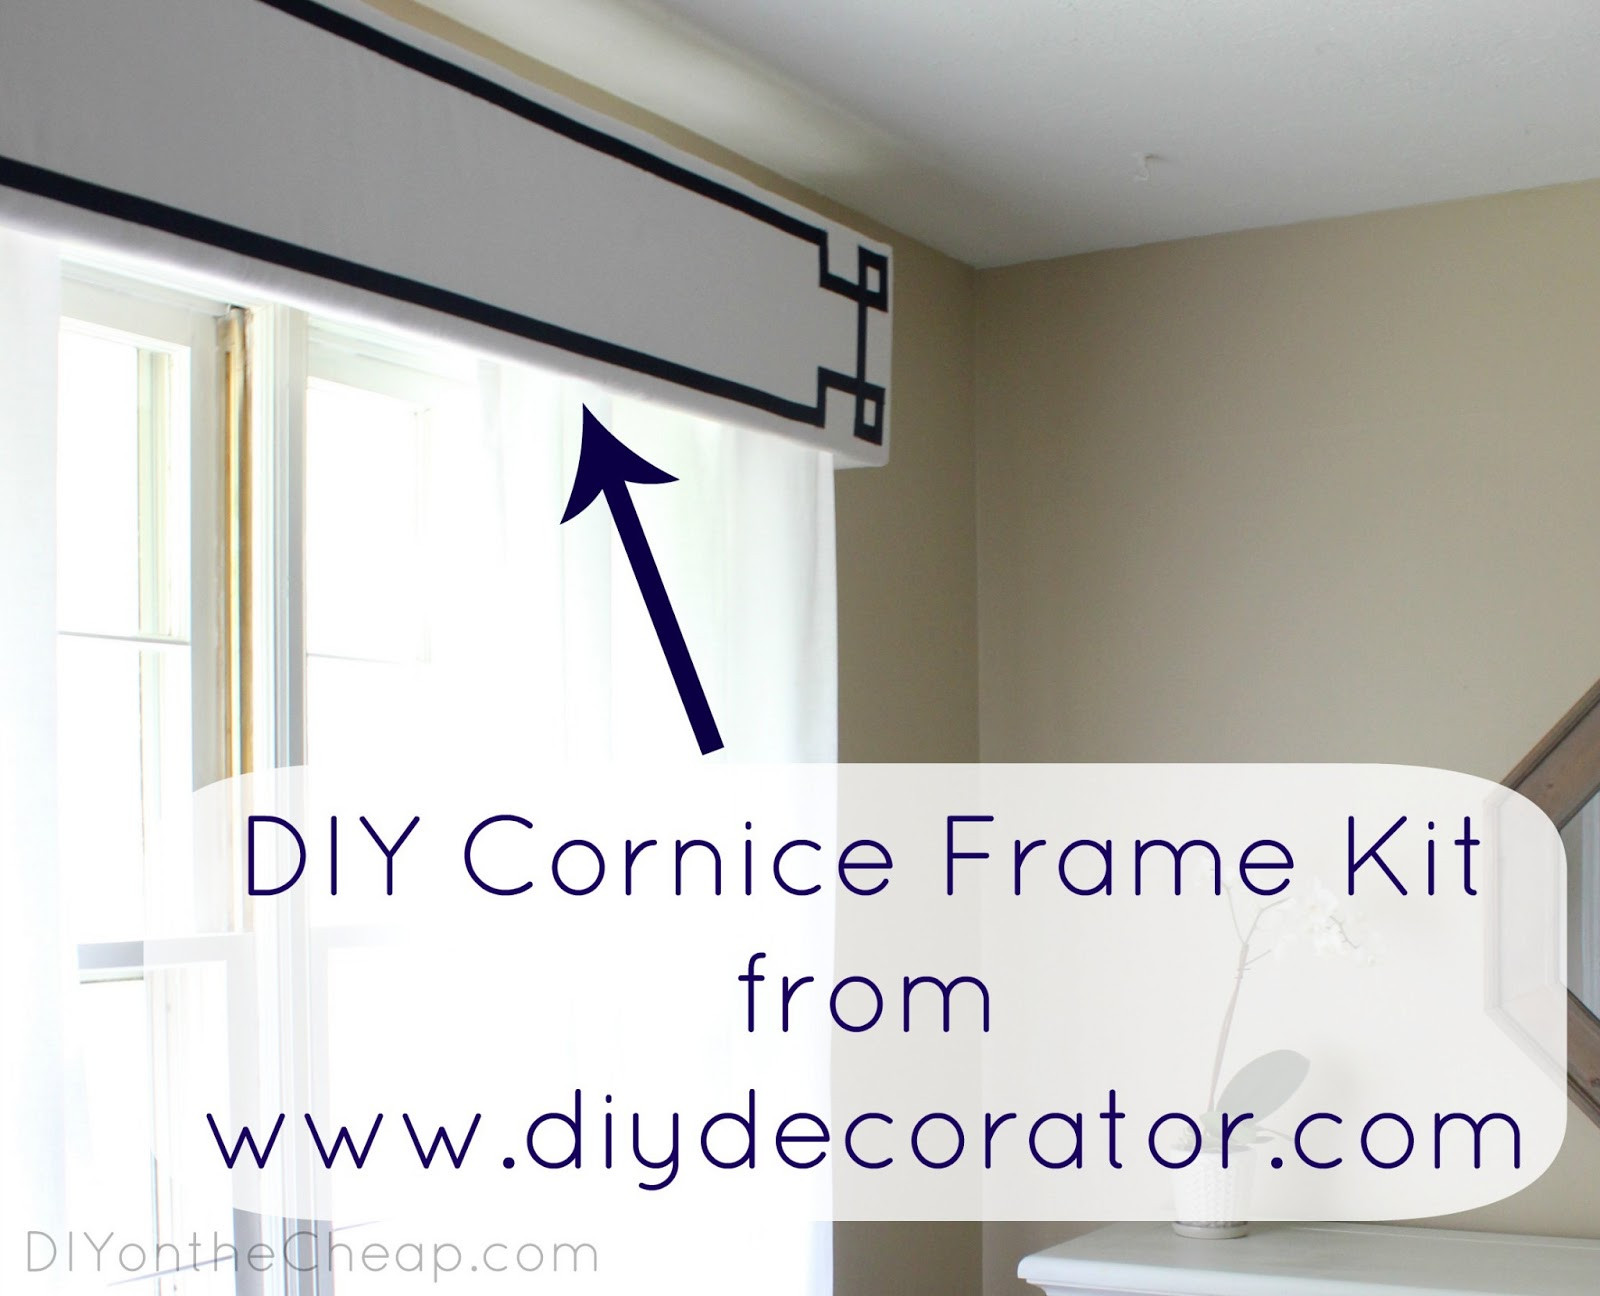 DIY Cornice Kits
 New Window Treatments DIY Cornice Frame Kit Review